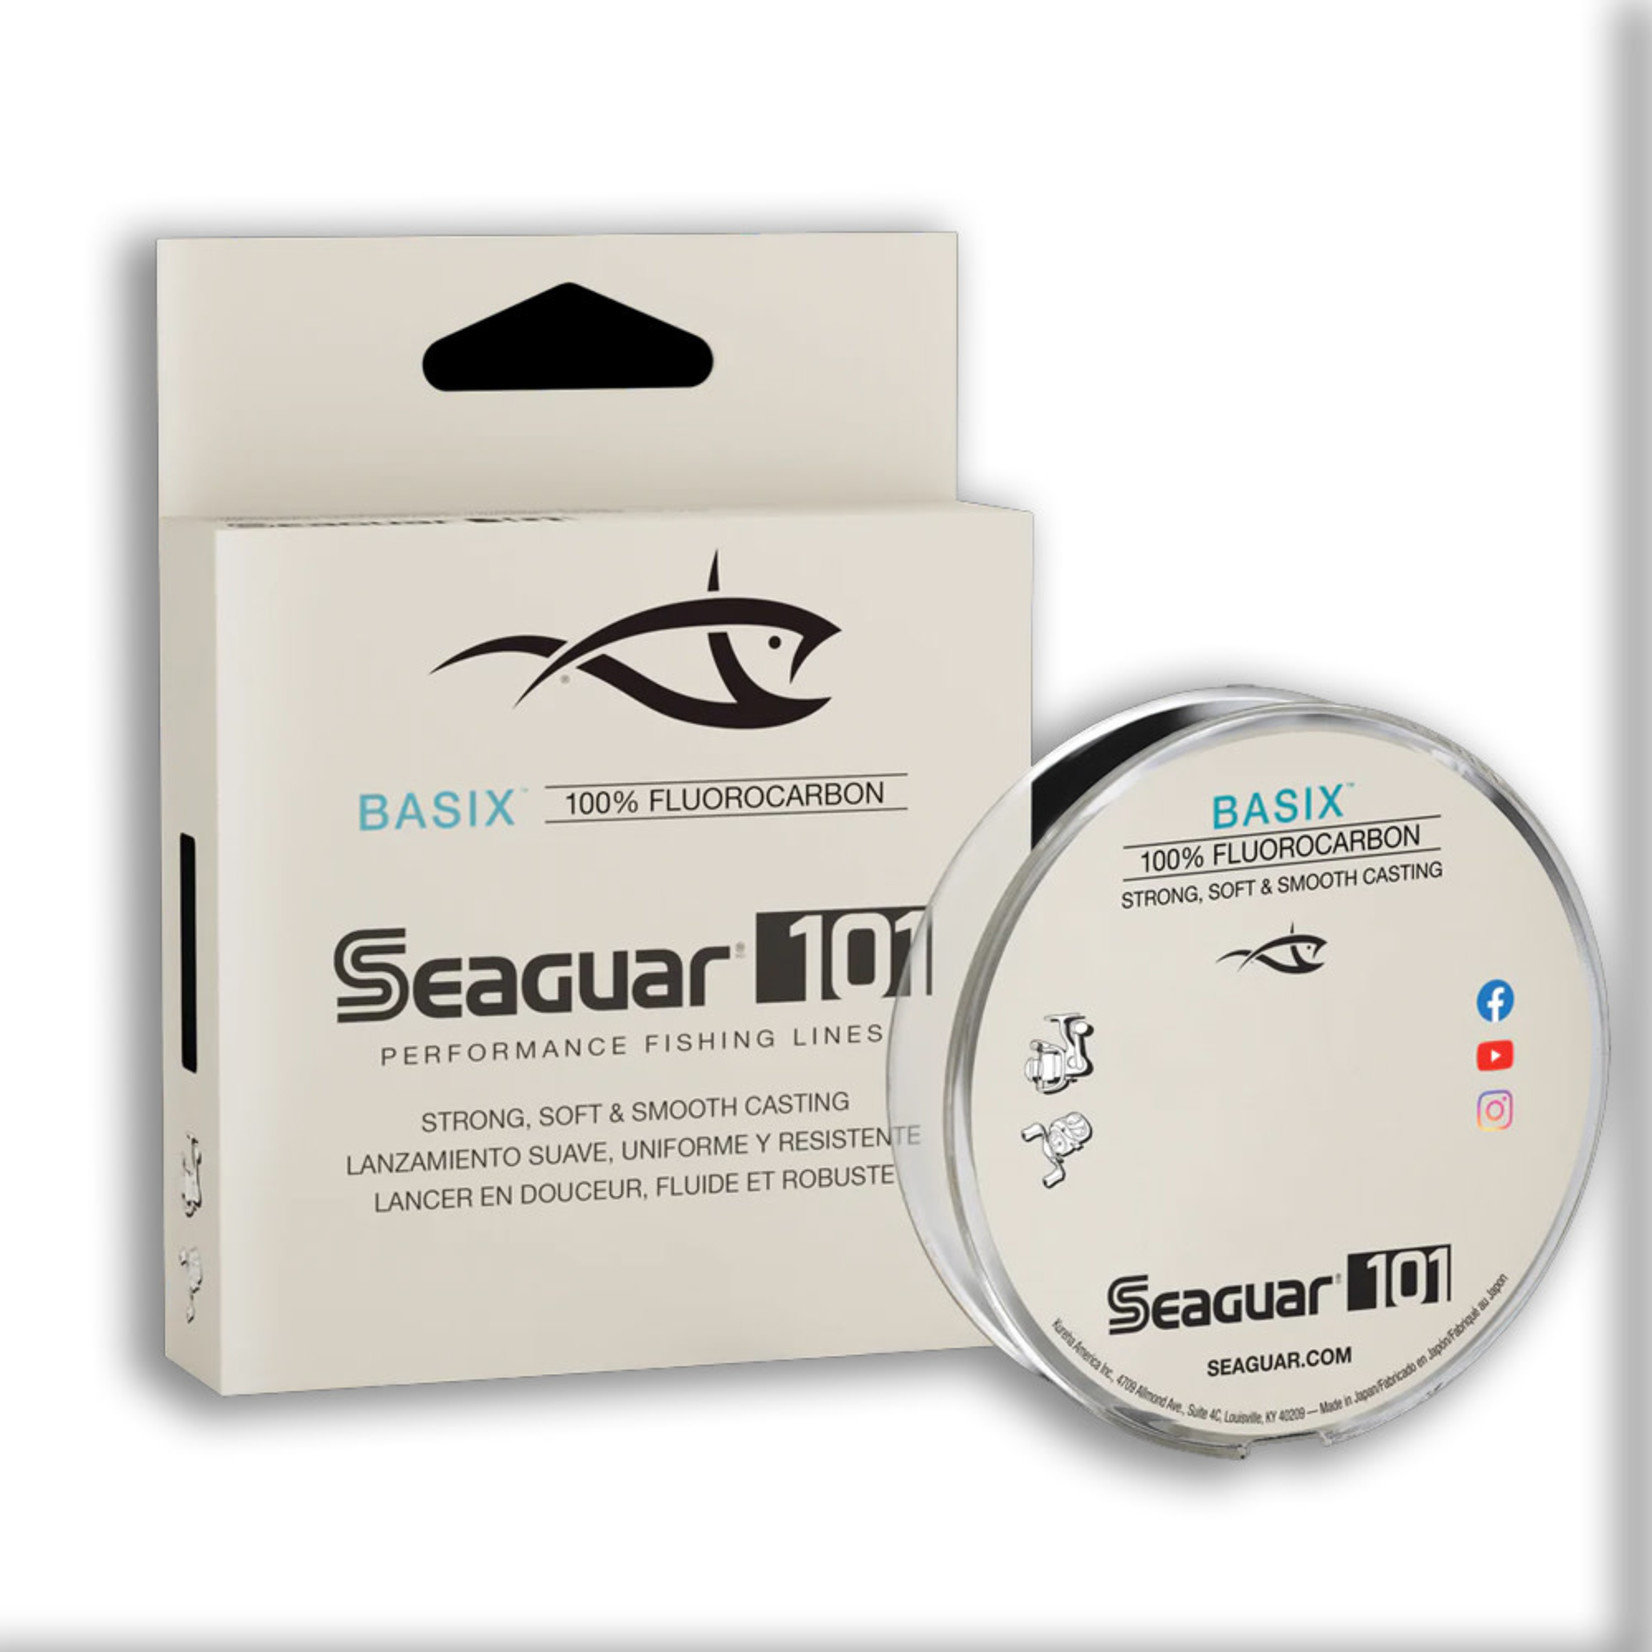 Seaguar BASIX 101